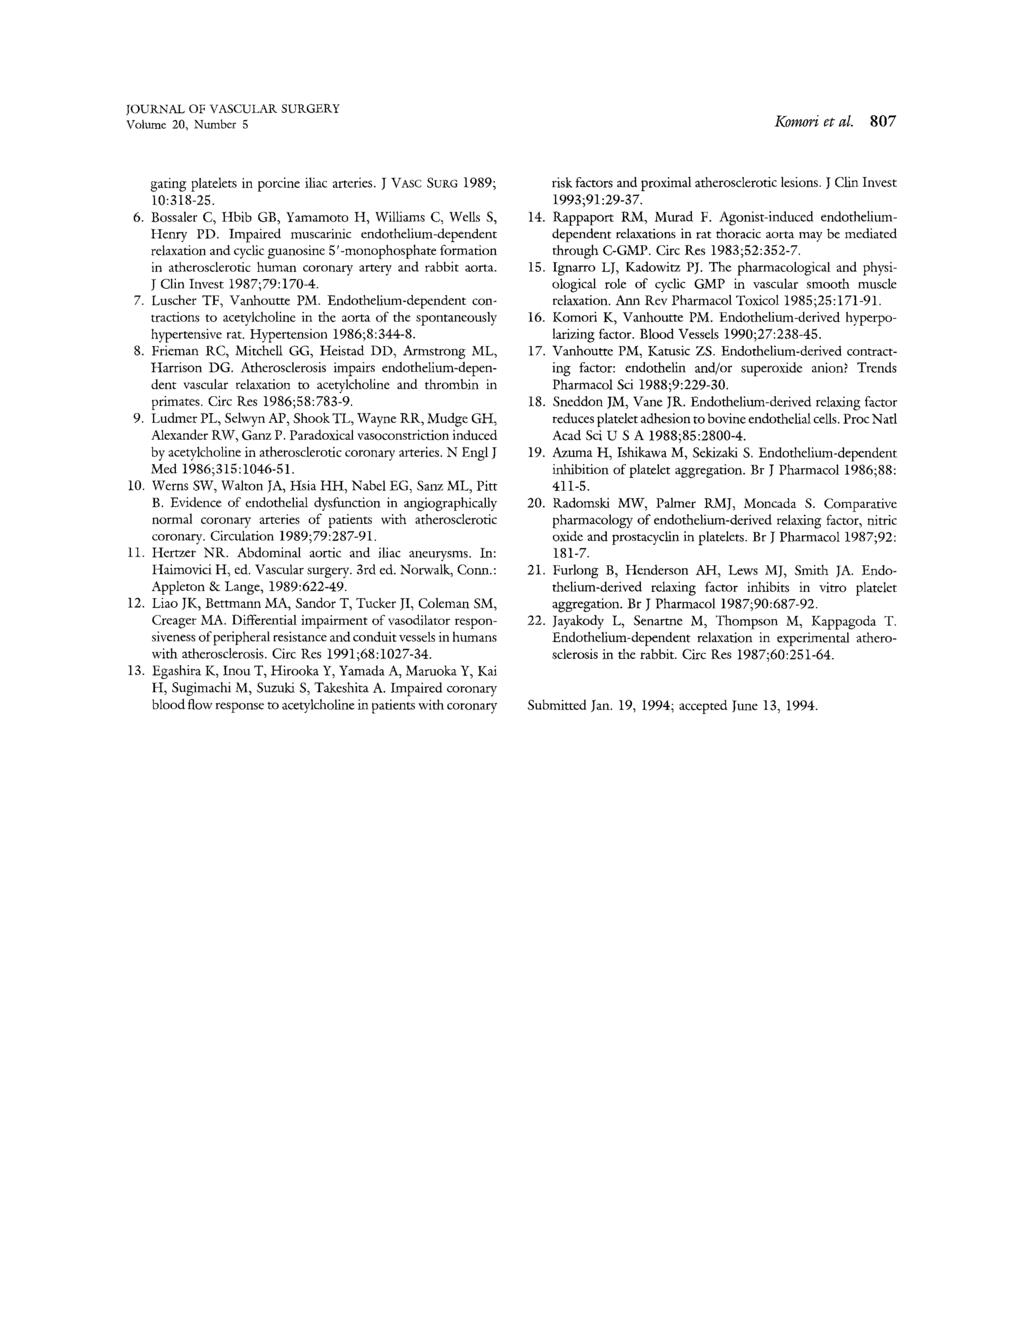 Volume 20, Number 5 I(olftOri et al. 807 gating platelets in porcine iliac arteries. J VASC SURG 1989; 10:318-25. 6. Bossaler C, Hbib GB, Yamamoto H, Williams C, Wells S, Henry PD.